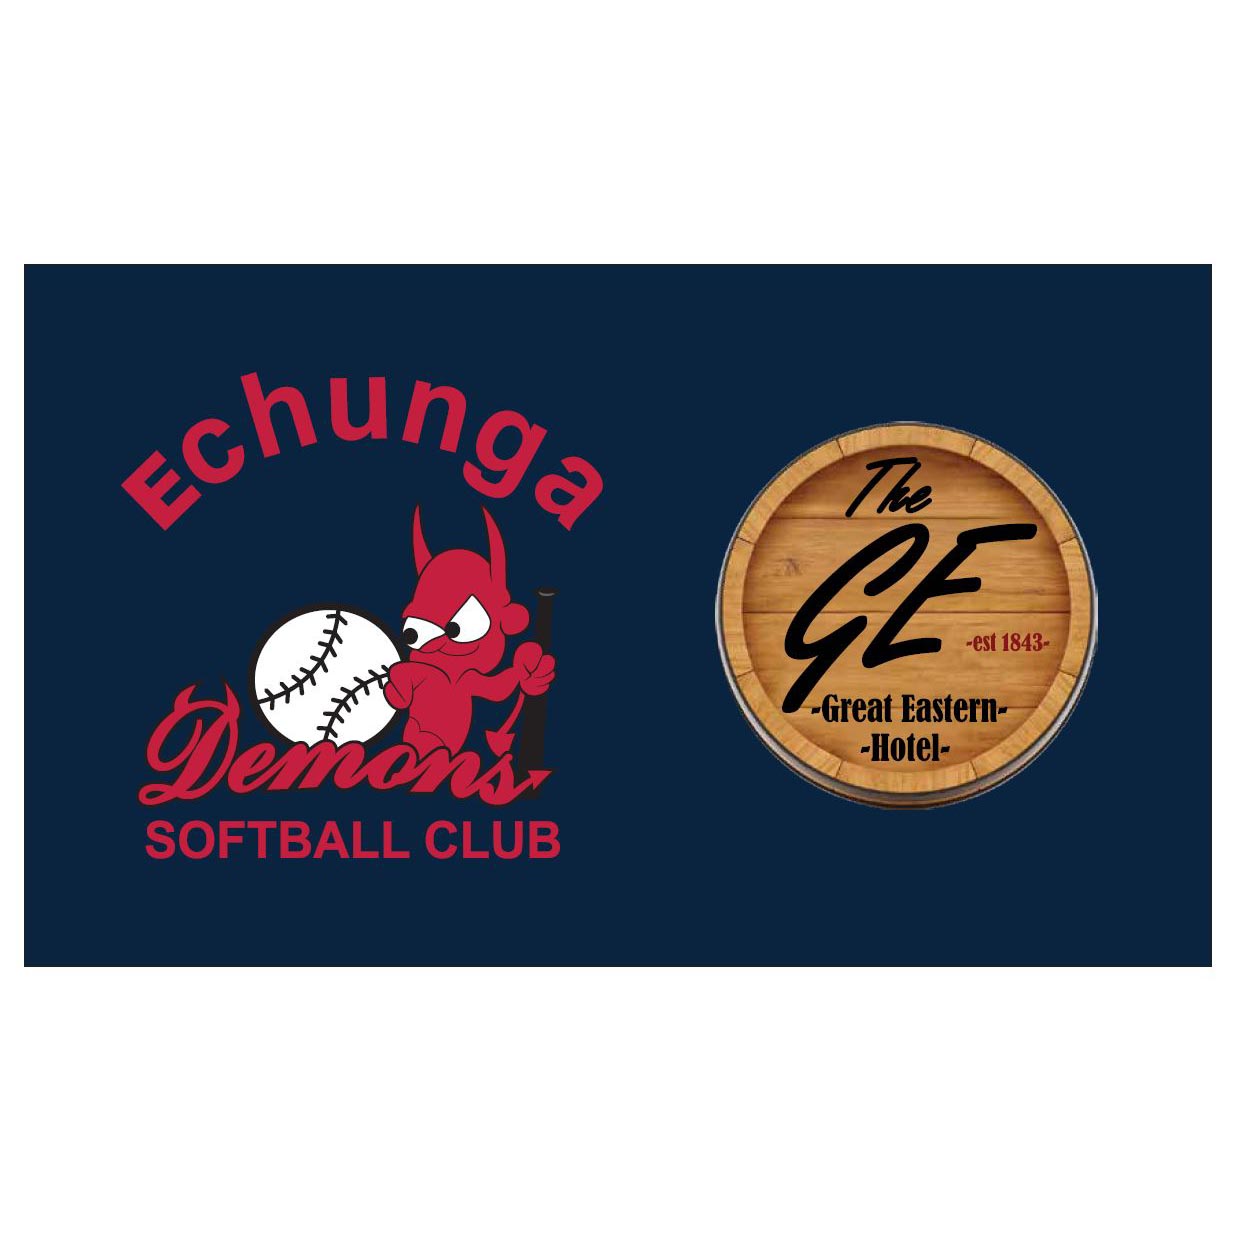 Echunga Softball Stubby Holder